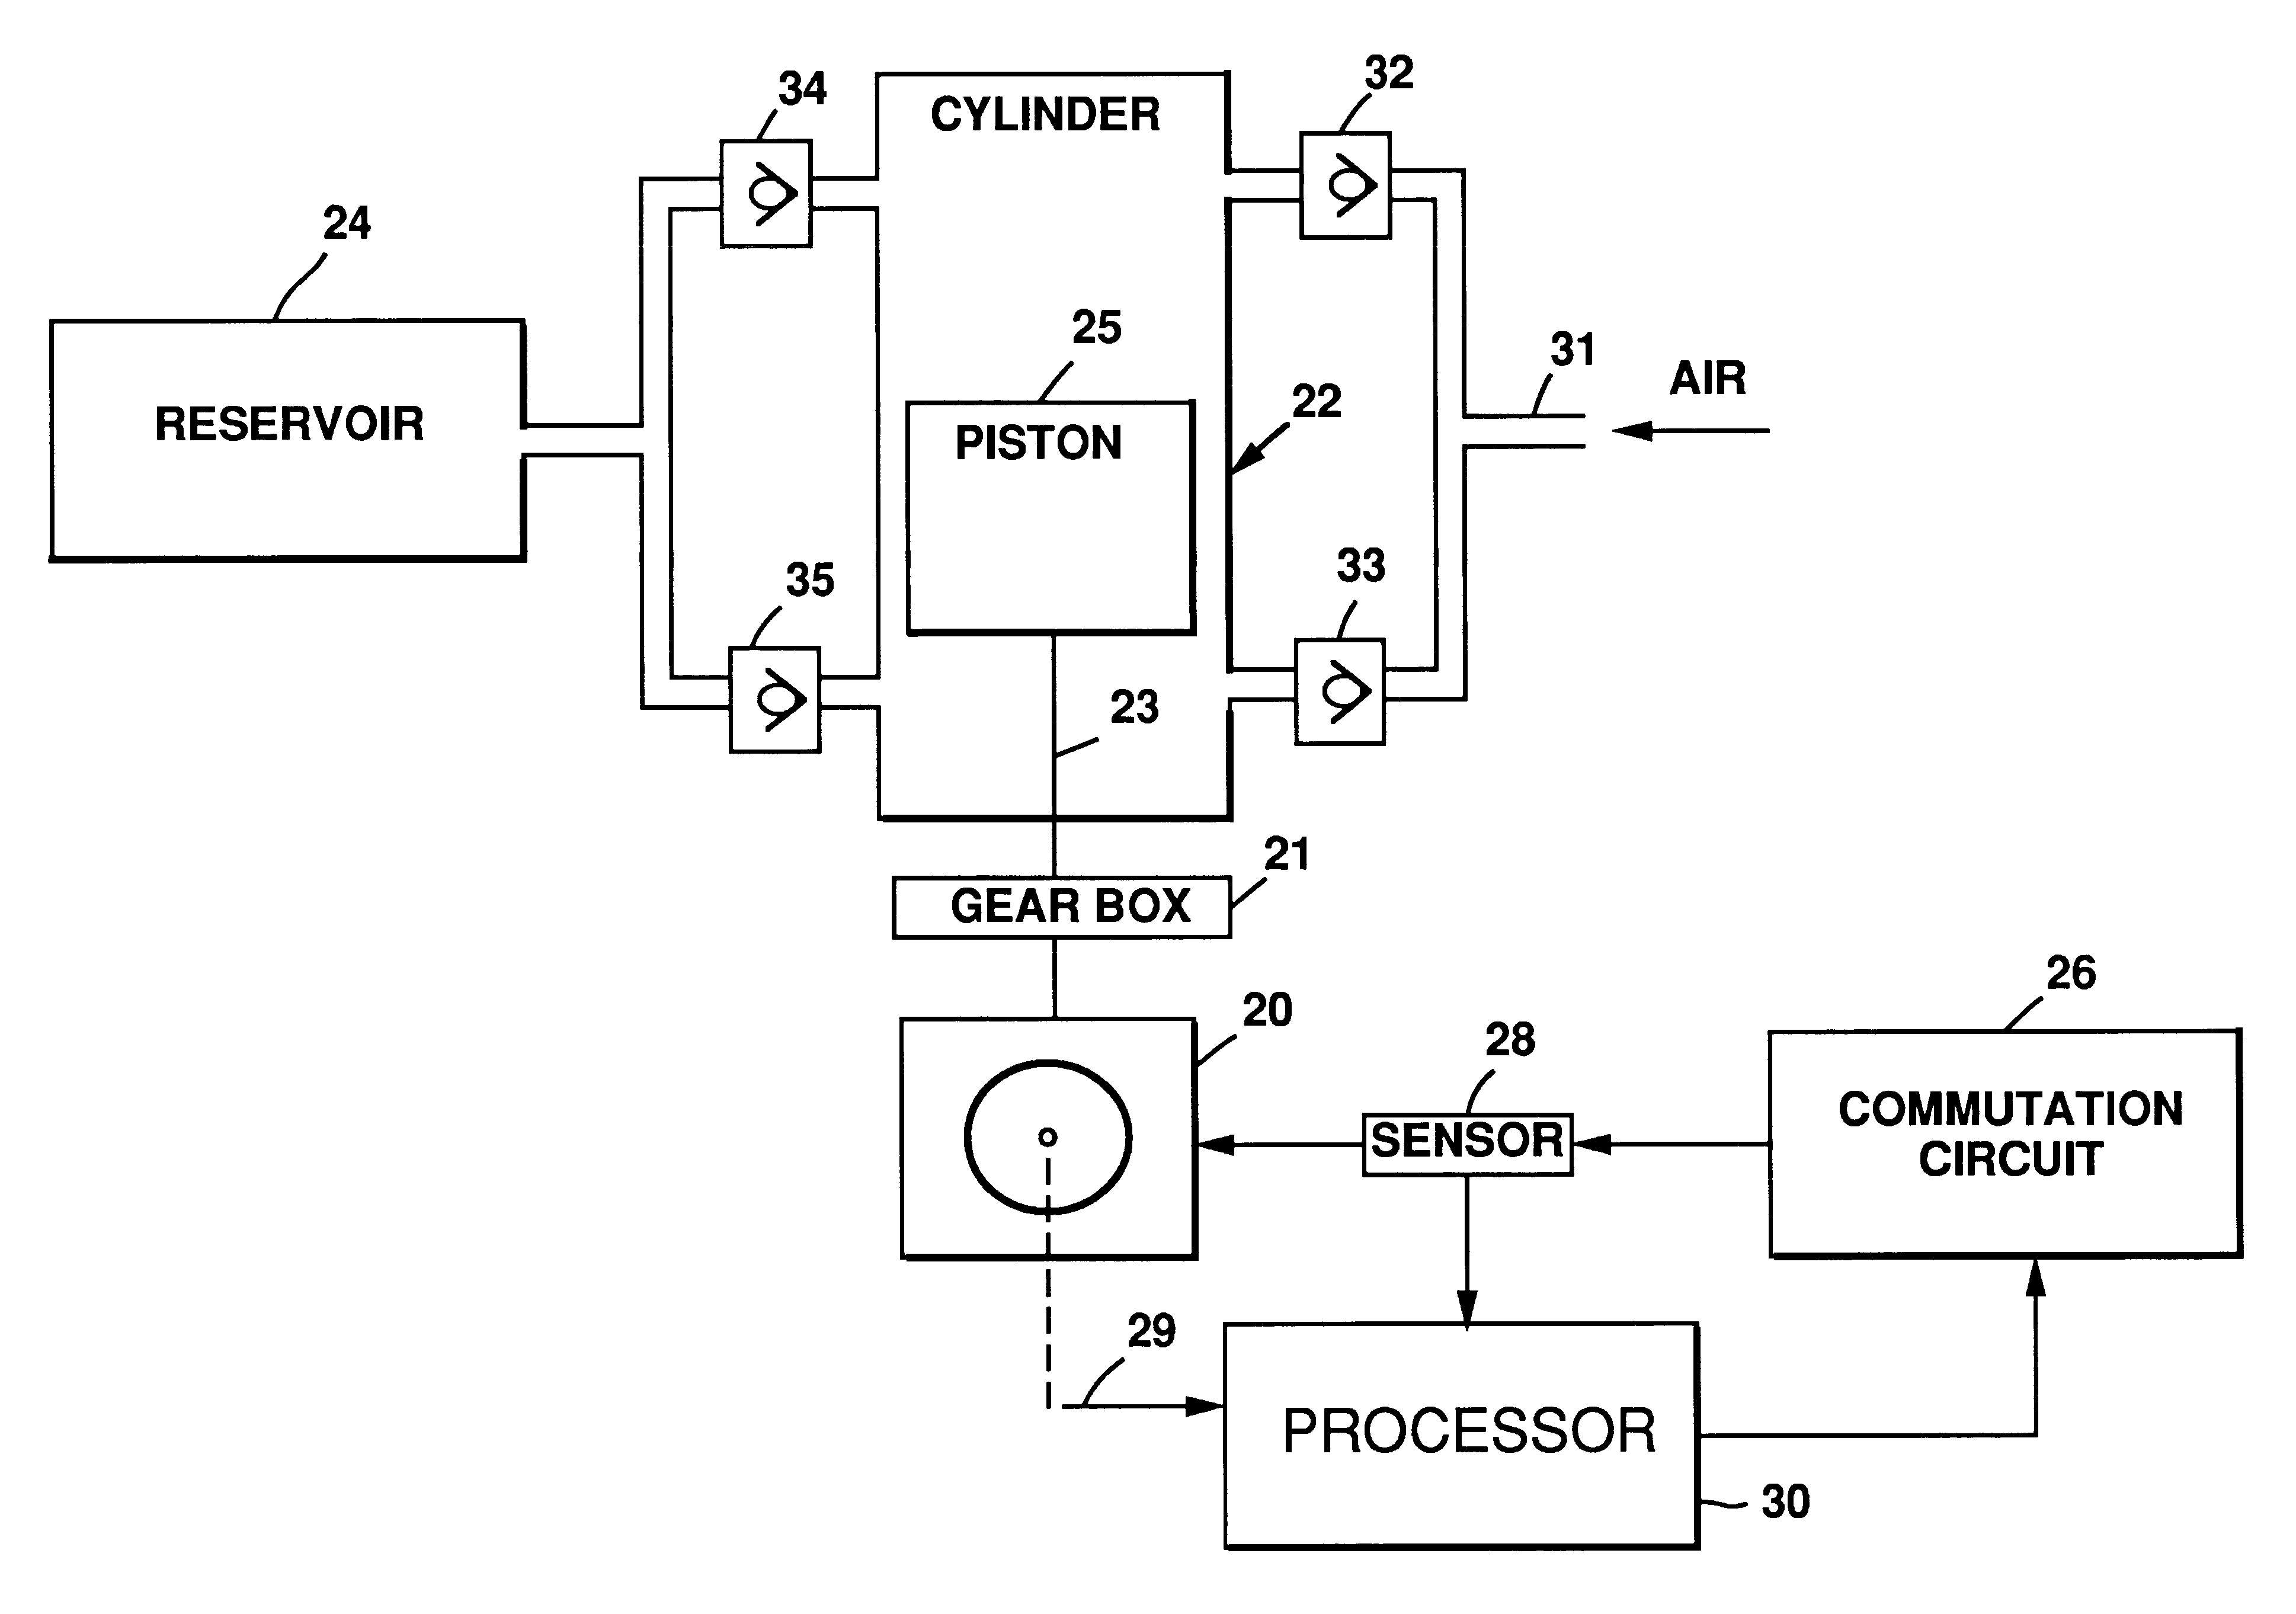 Pressure control system using input current sensing